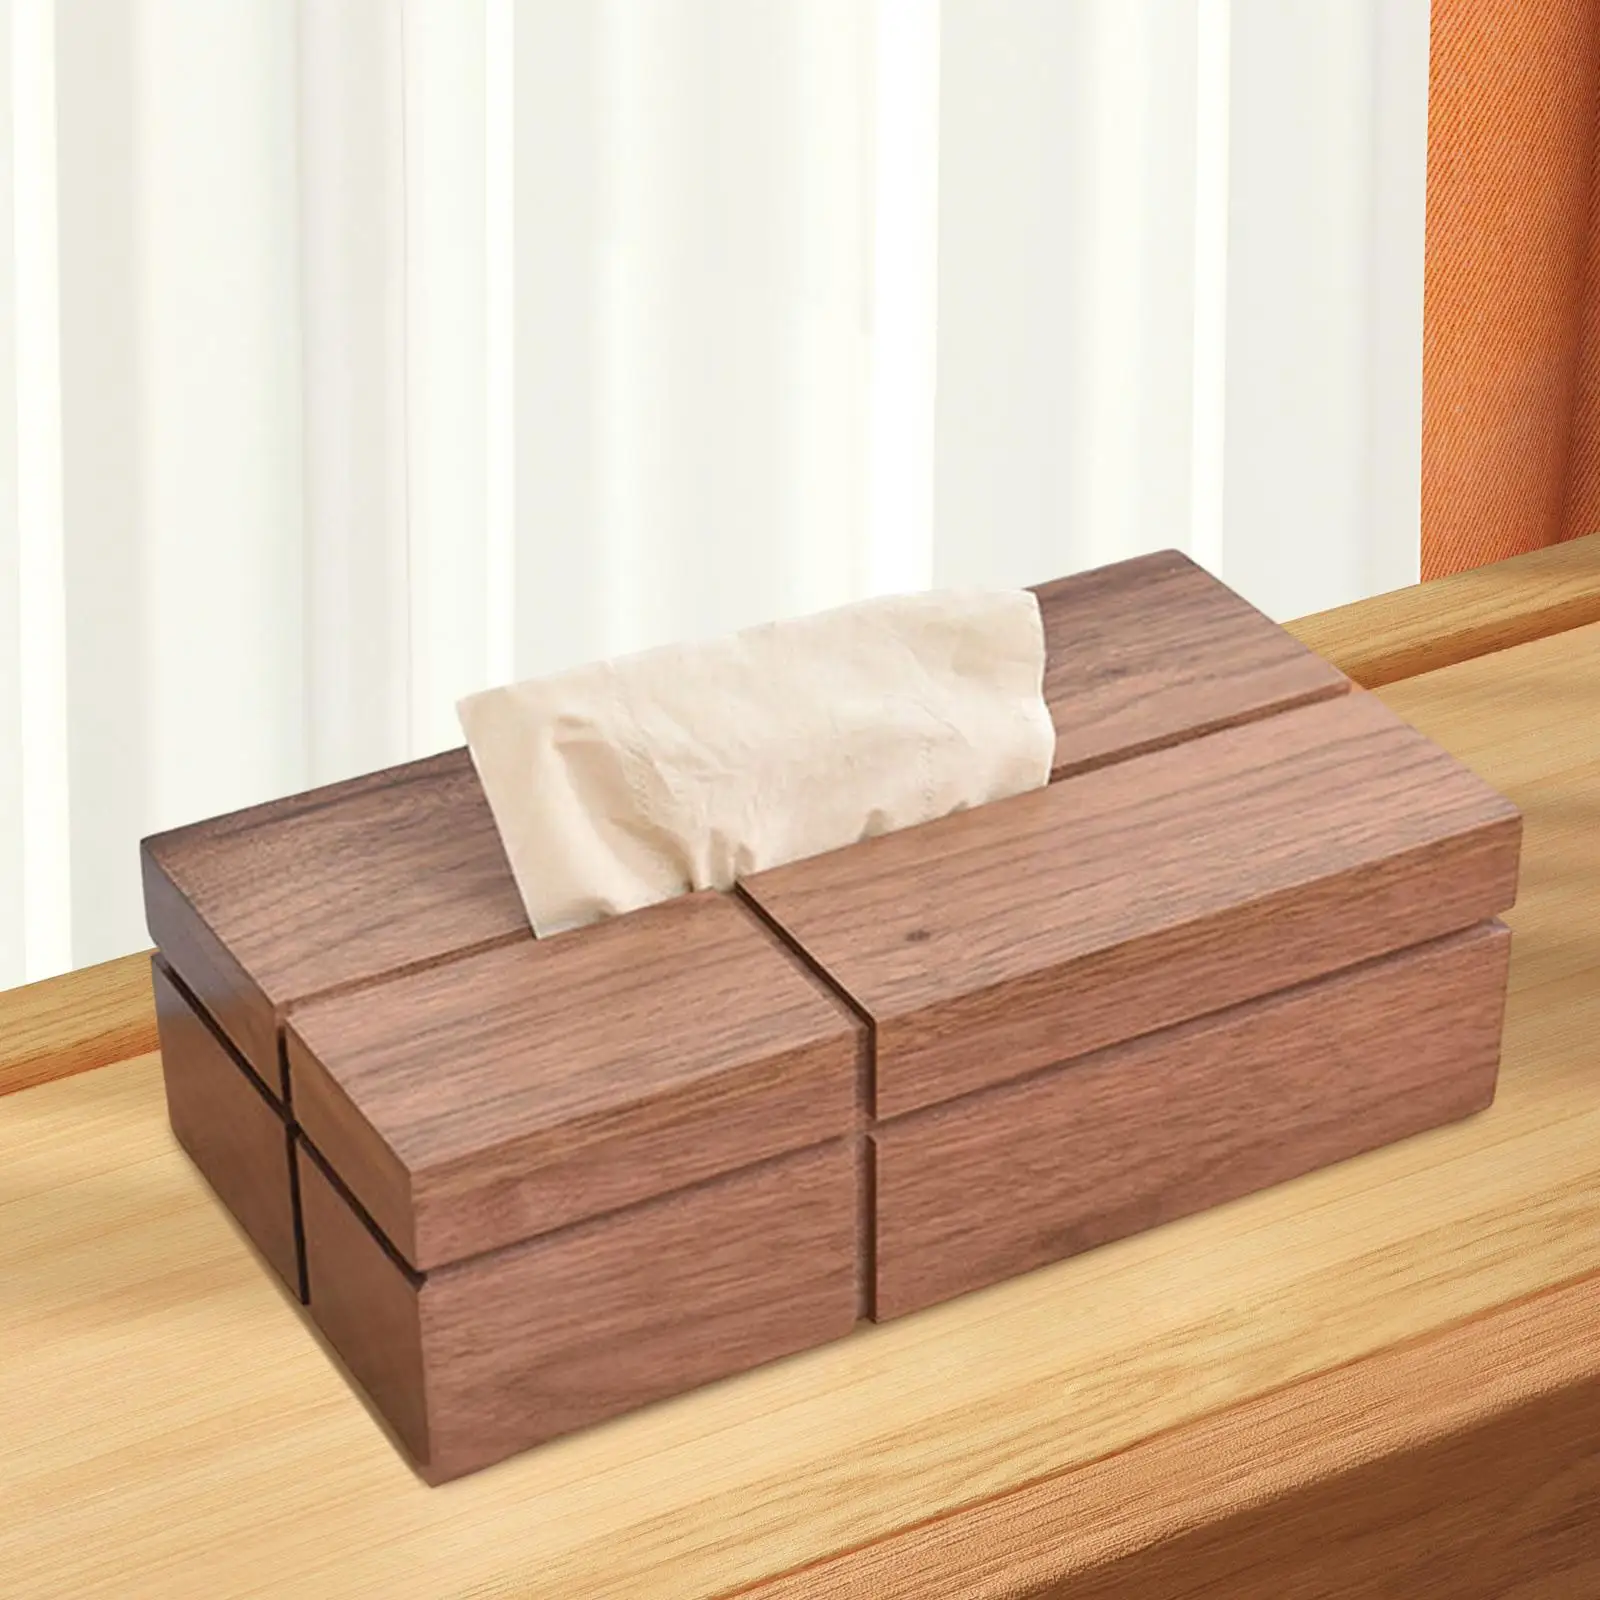 Tissue Case Rectangular Napkin Dispenser modern Multipurpose Facial Tissues Container for Night Stands Hotel Bathroom Car